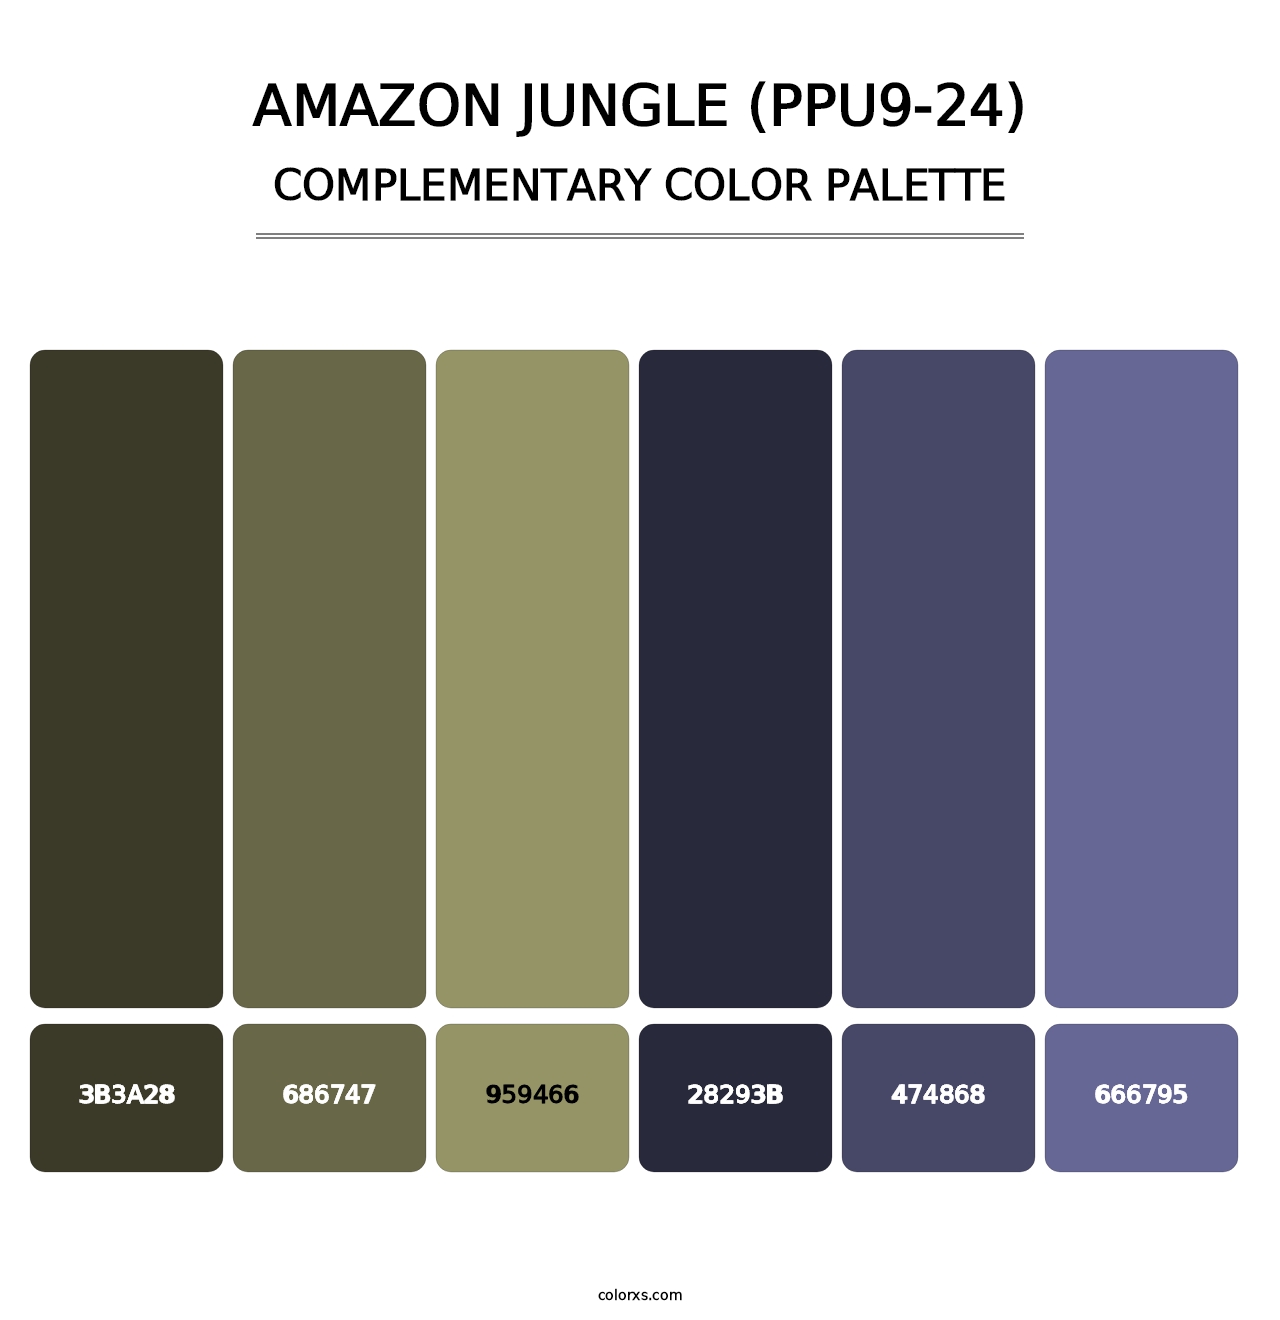 Amazon Jungle (PPU9-24) - Complementary Color Palette